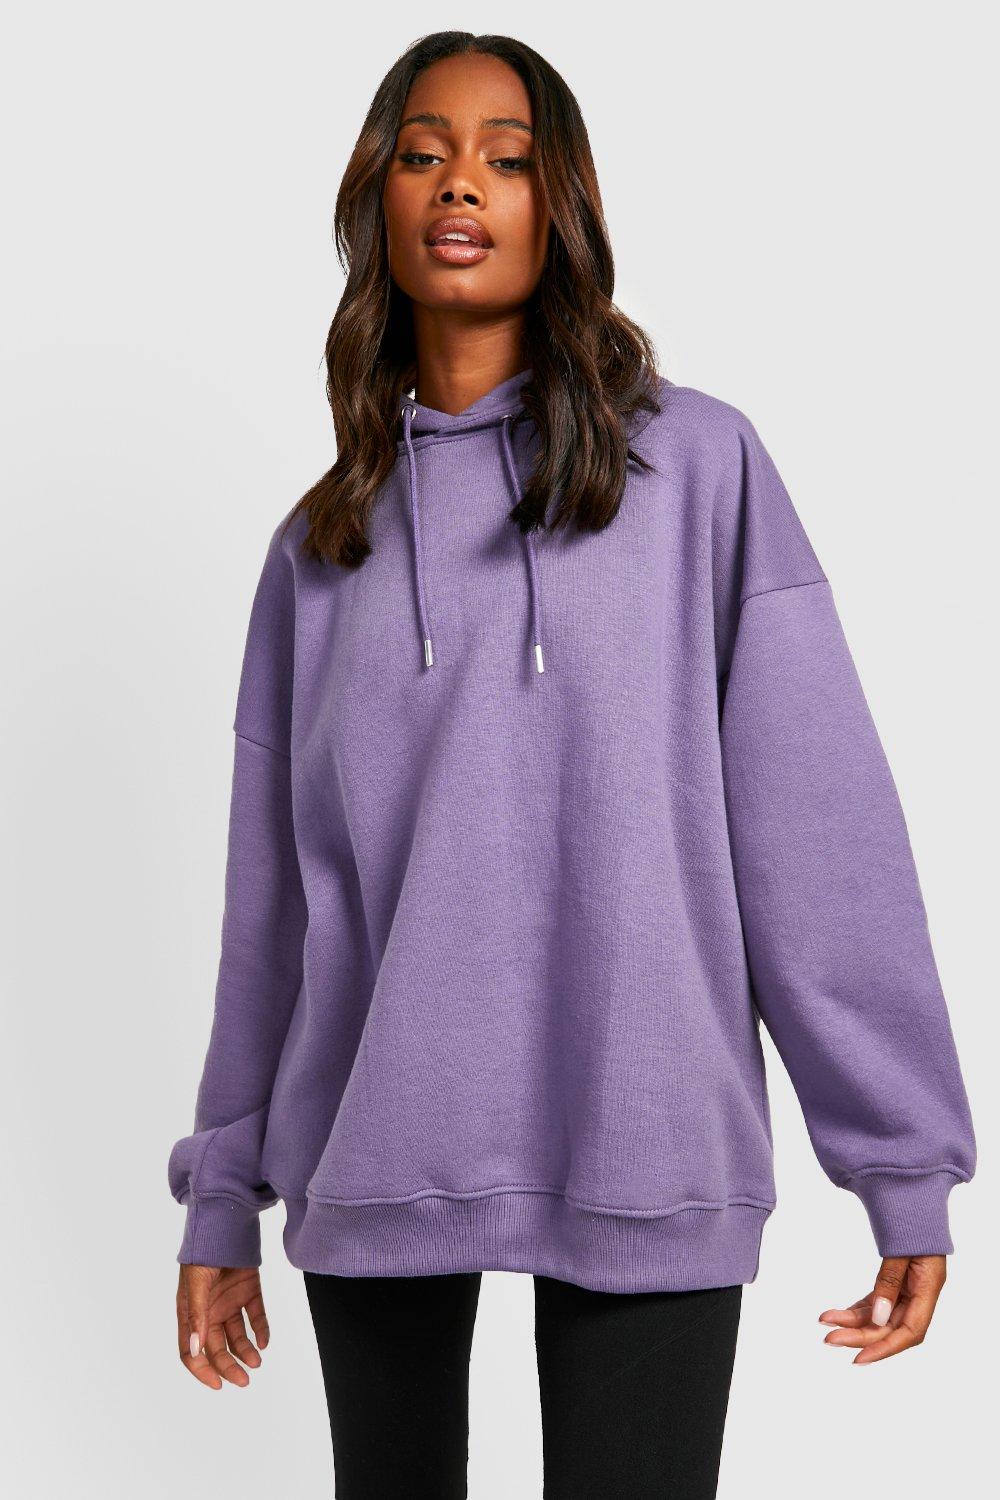 BIZIZA Oversized Pullover Hoodie Drawstring Women's Printed Crew Neck  Sweatshirts Pullover Long Sleeve Graphic Top for Women Light Purple 4XL 